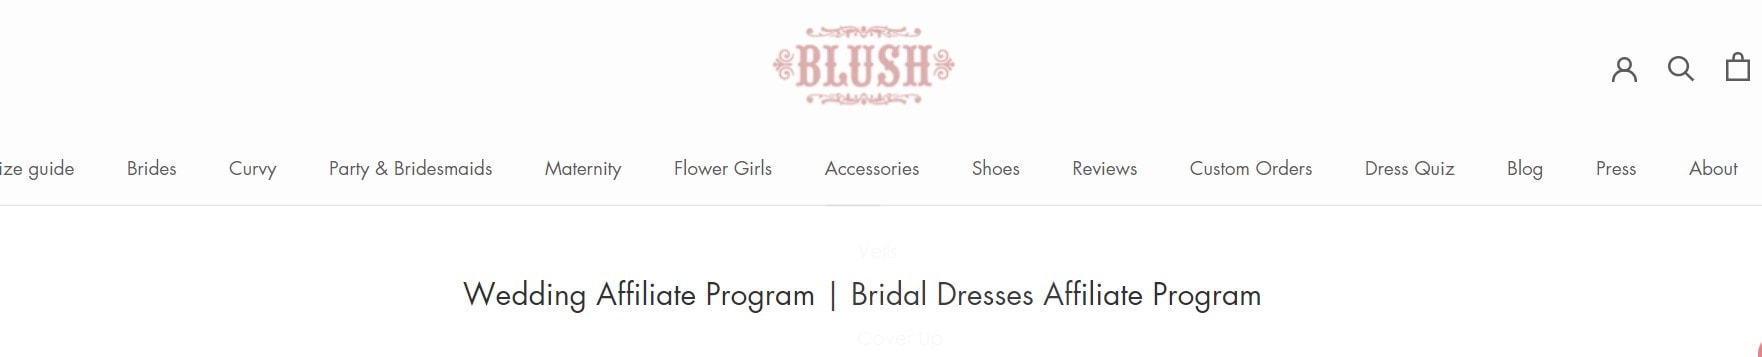 Blush Fashion Affiliate Programs